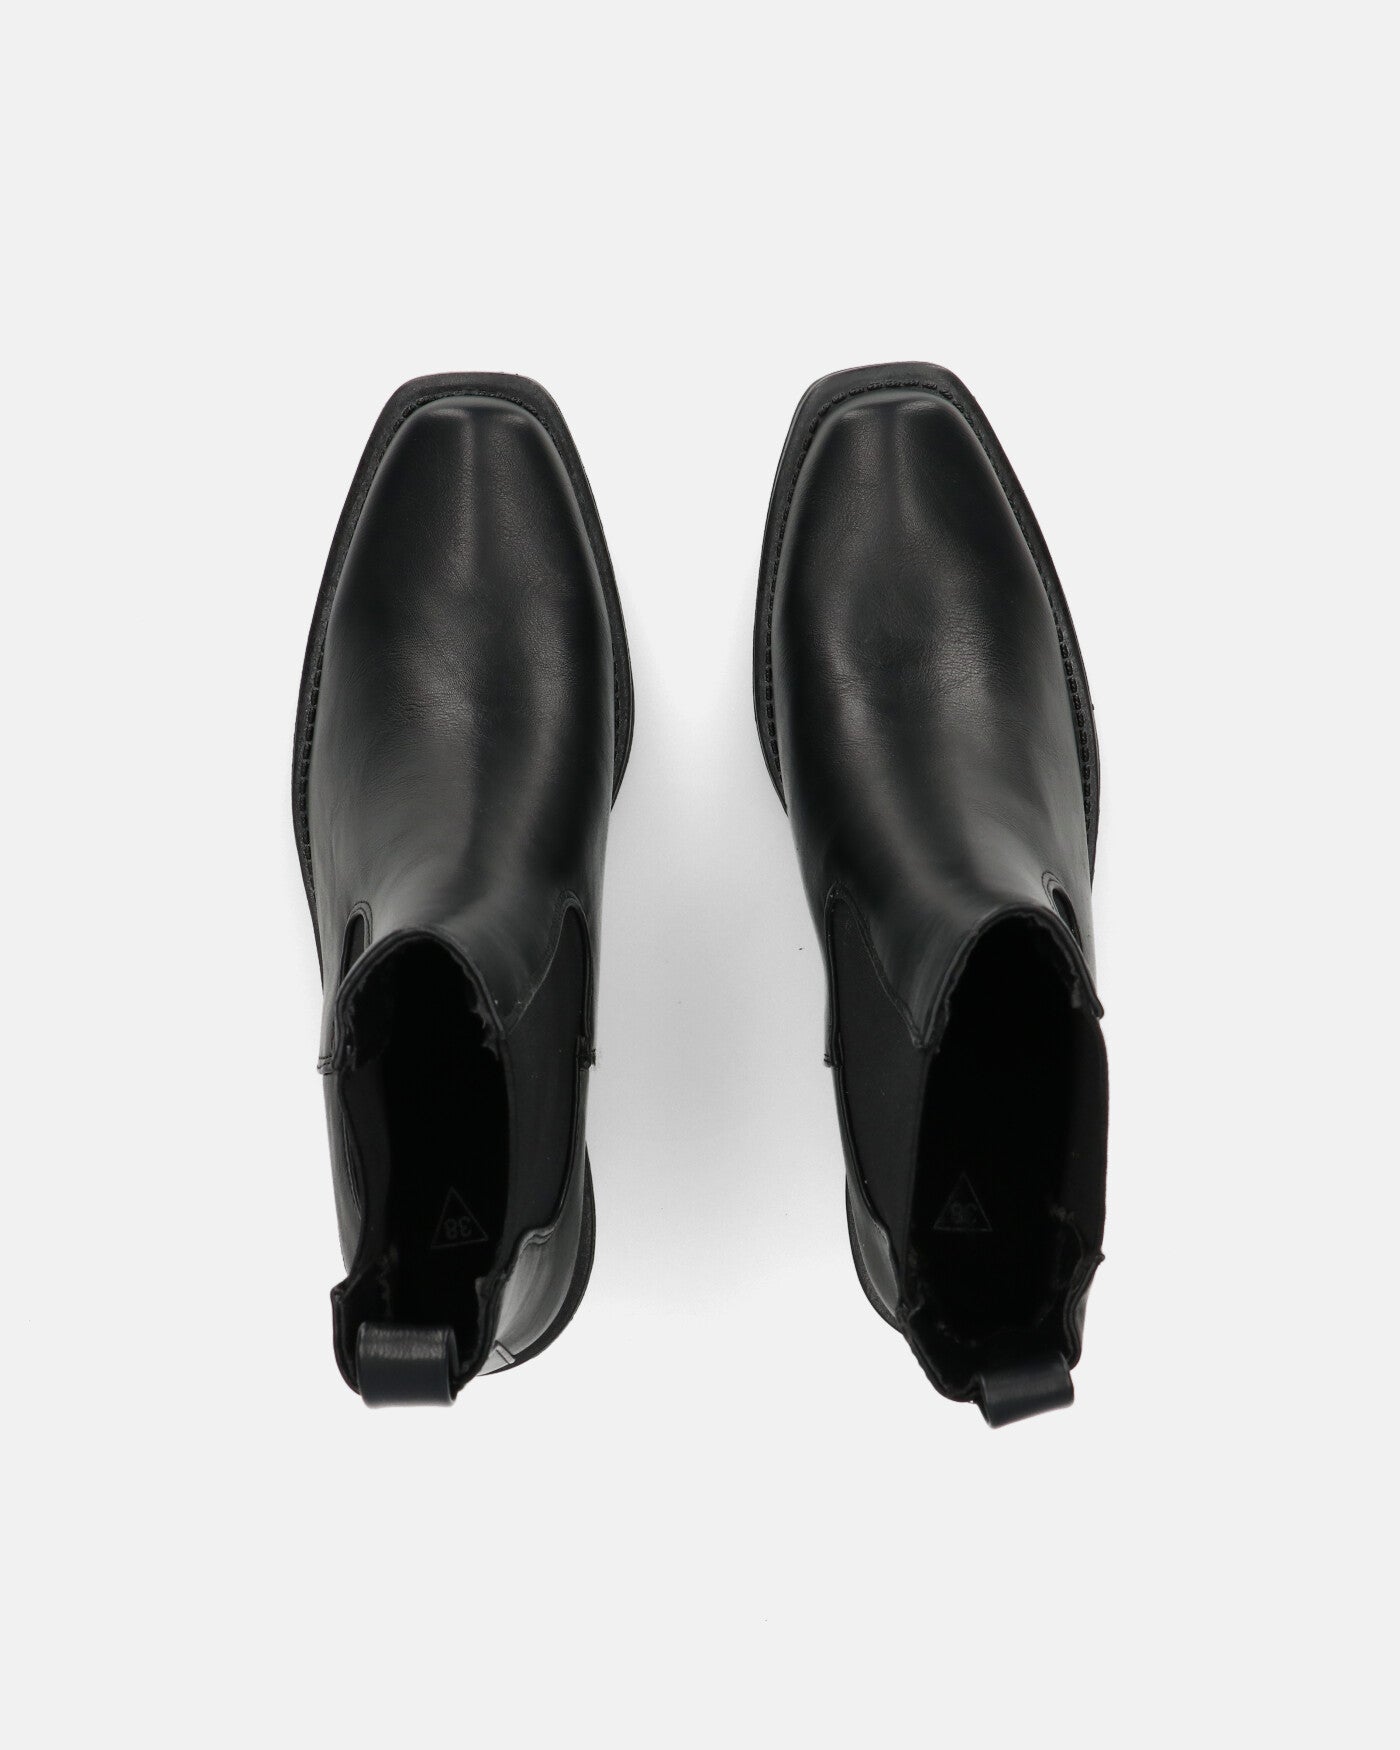 DEIENE - botines negros con banda elástica